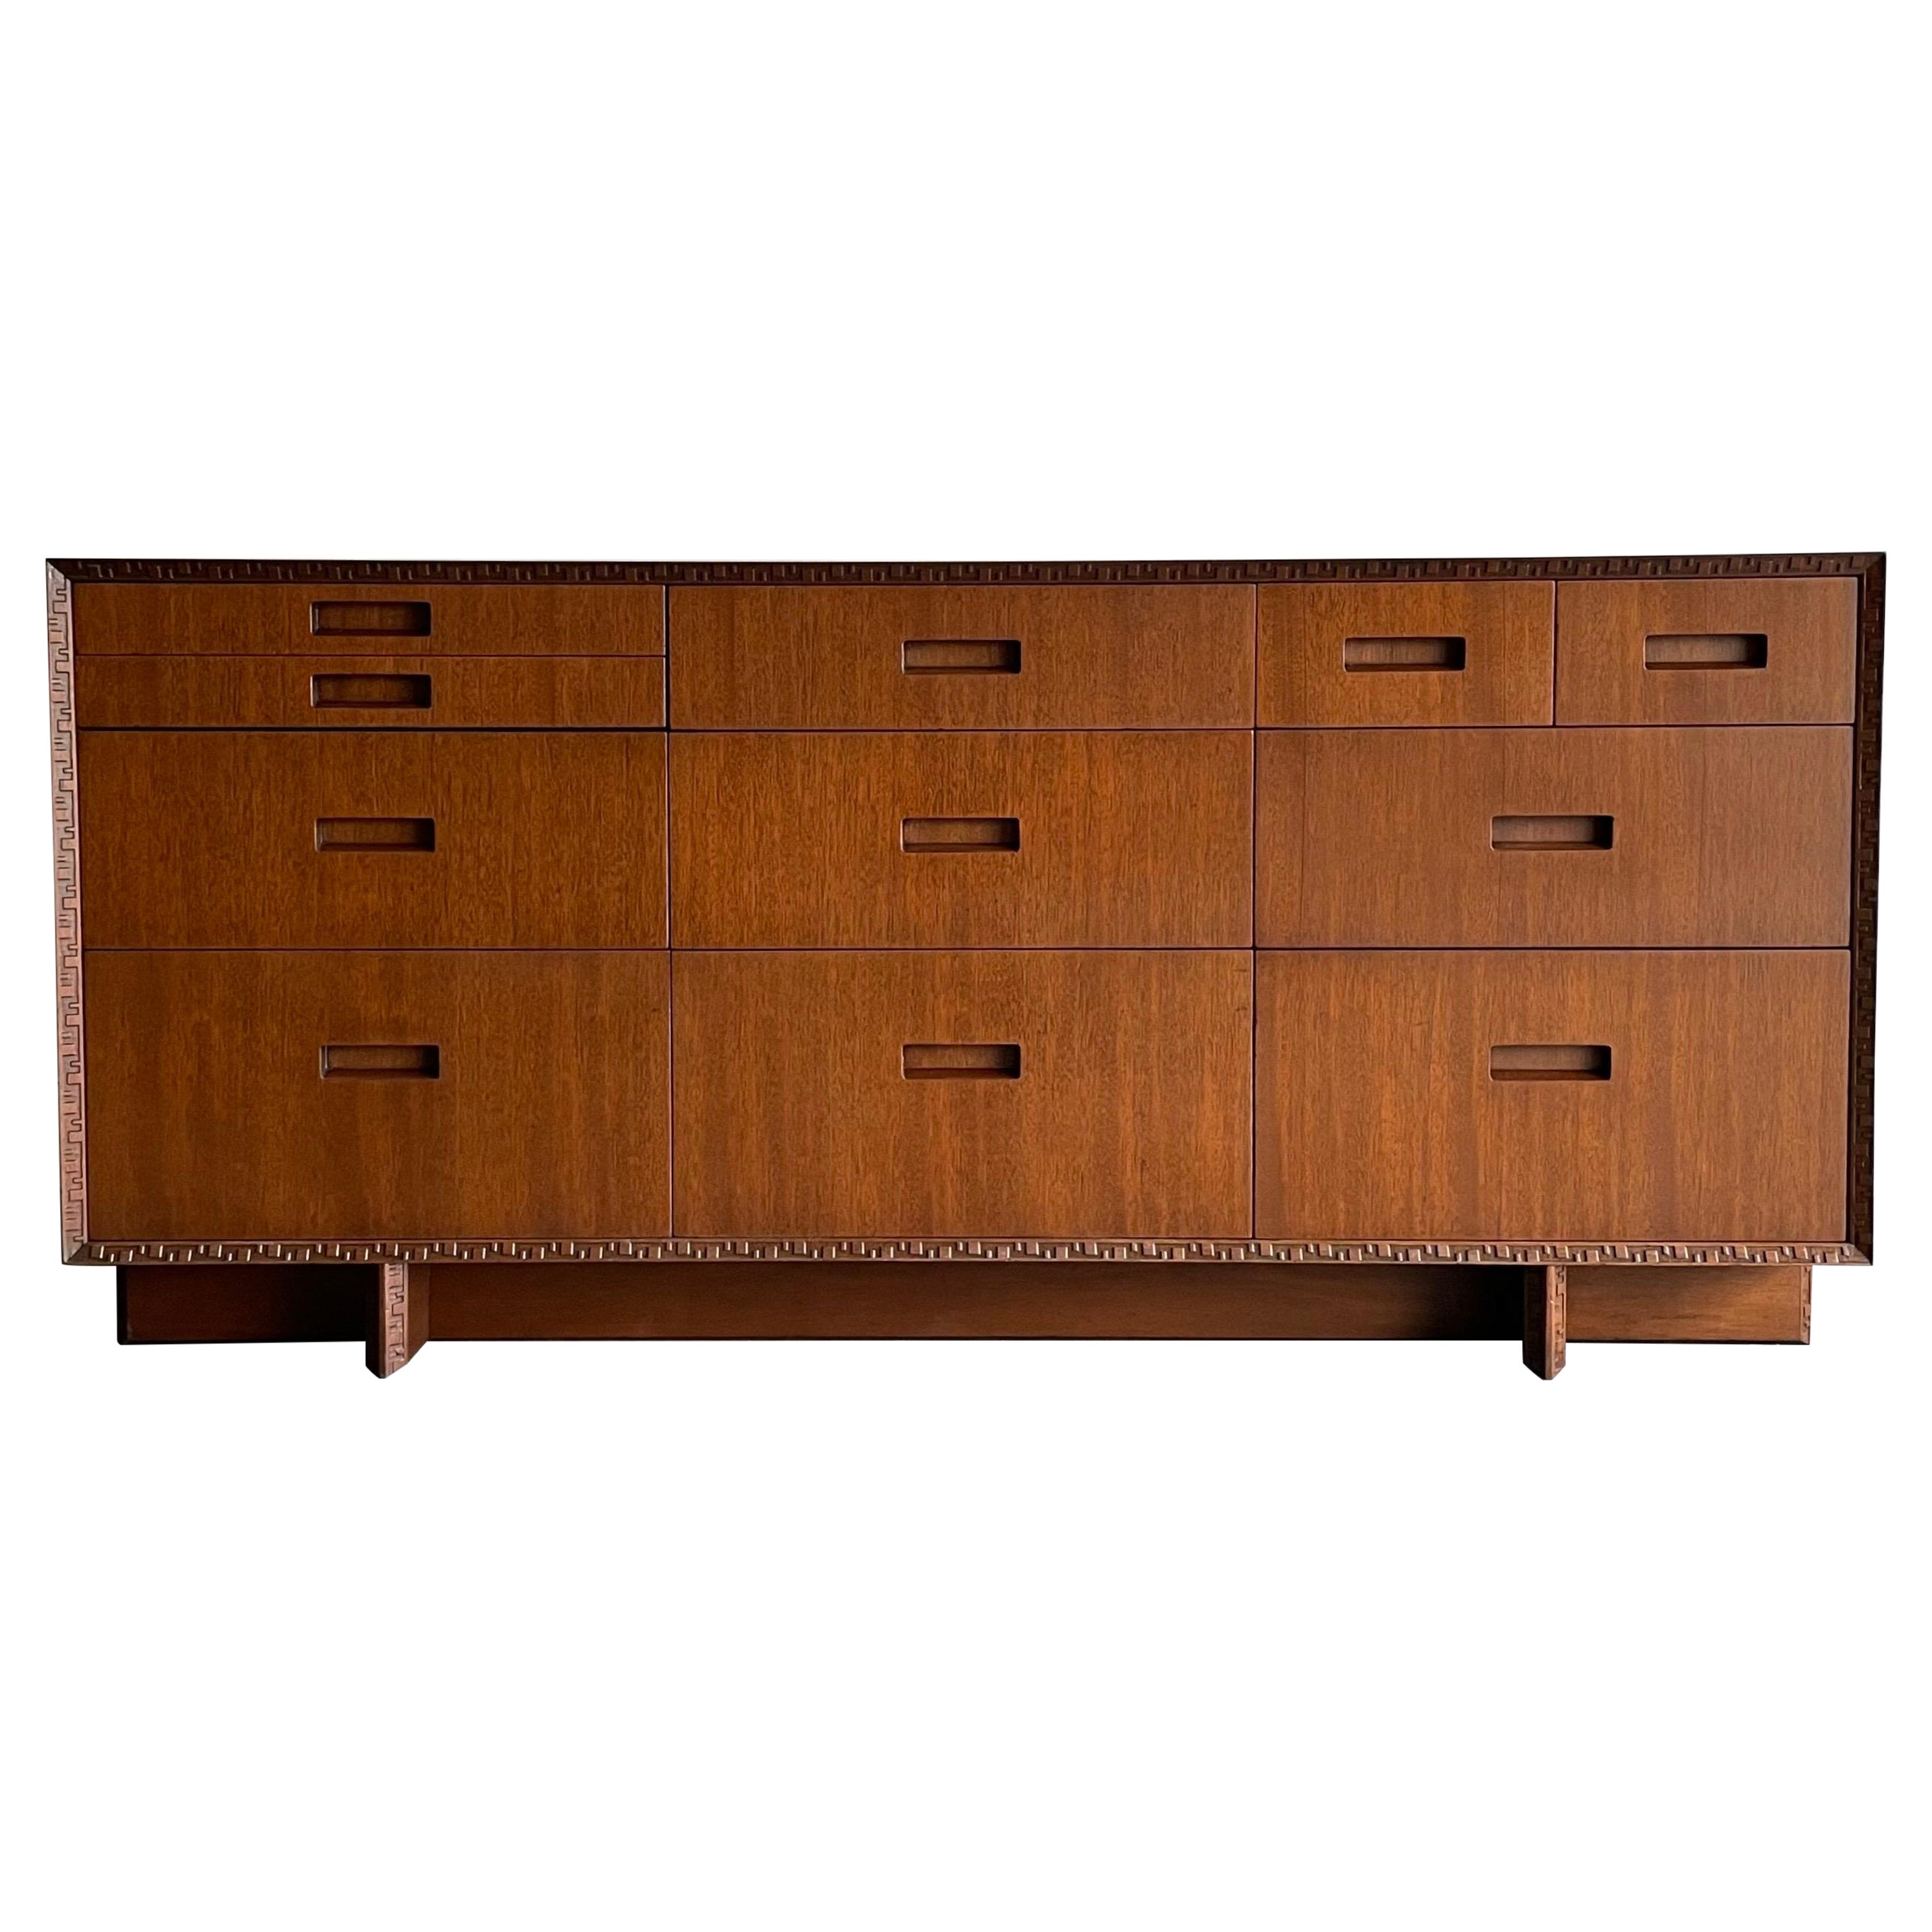 Frank Lloyd Wright for Henredon “Taliesin” Dresser or Sideboard